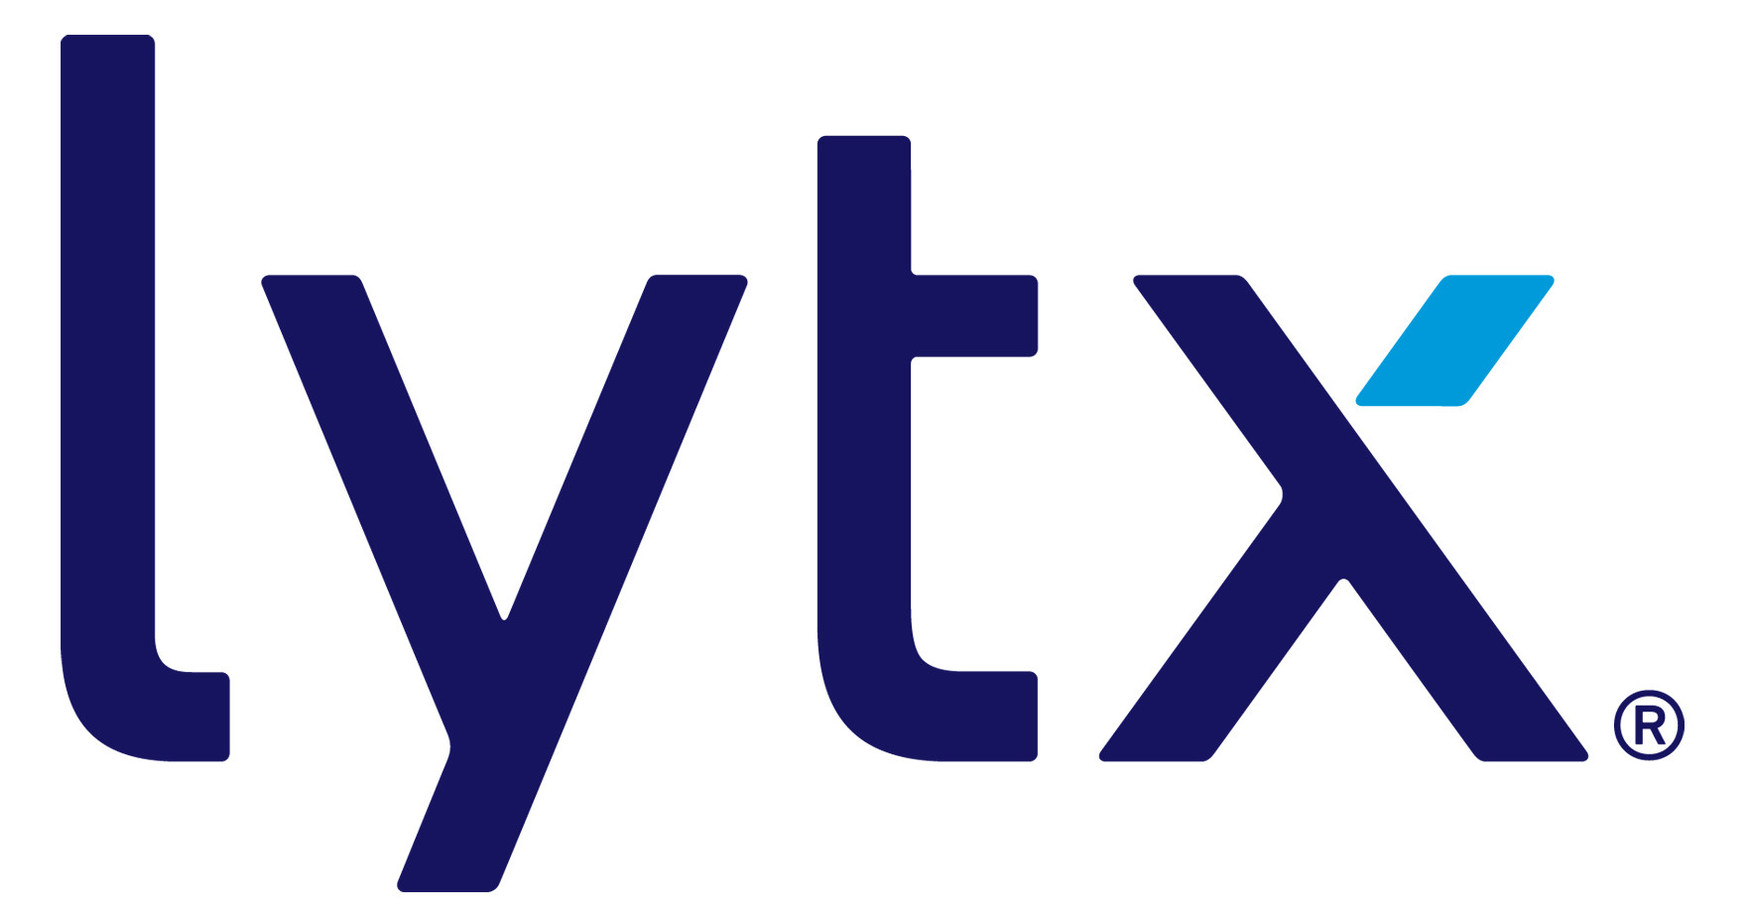 Lytx DriveCam MV+AI Technology 